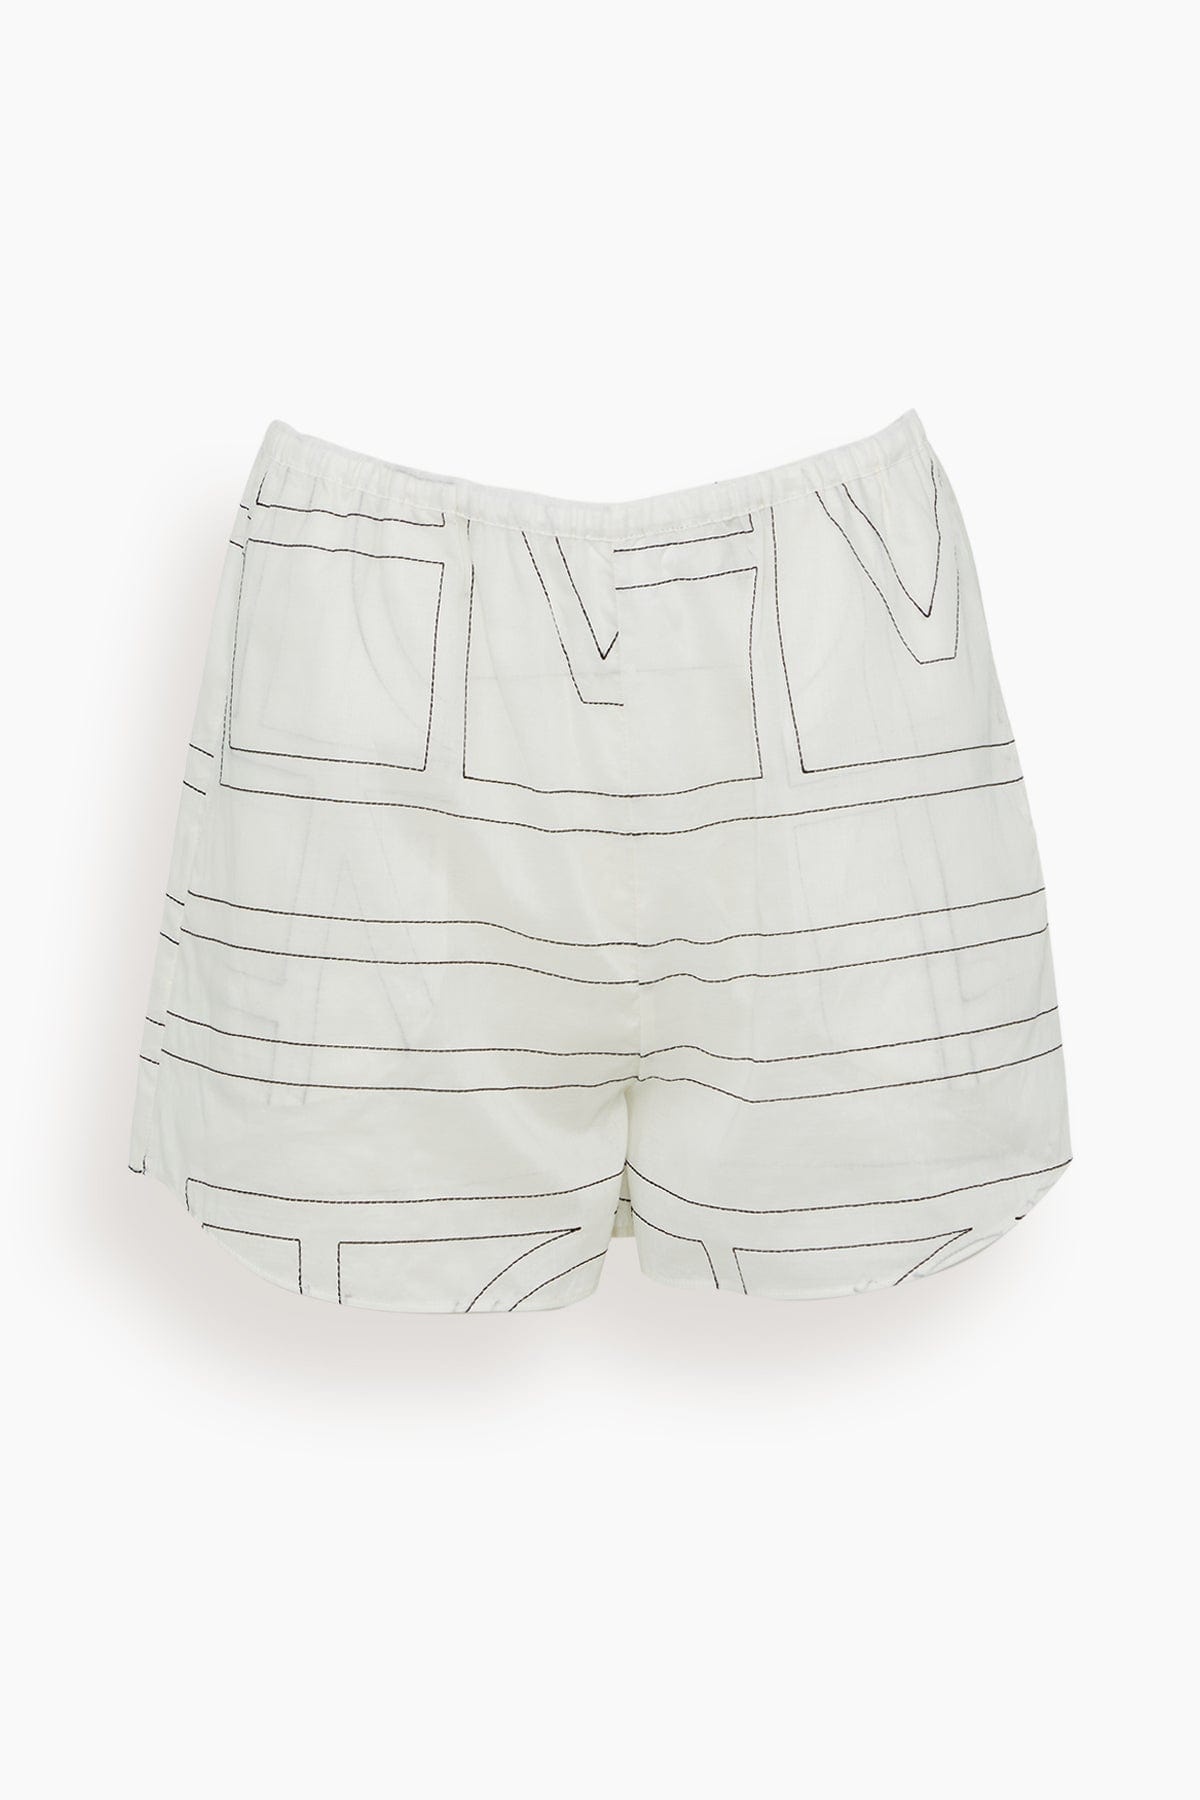 Monogram Cotton PJ Shorts in White/Black - 1